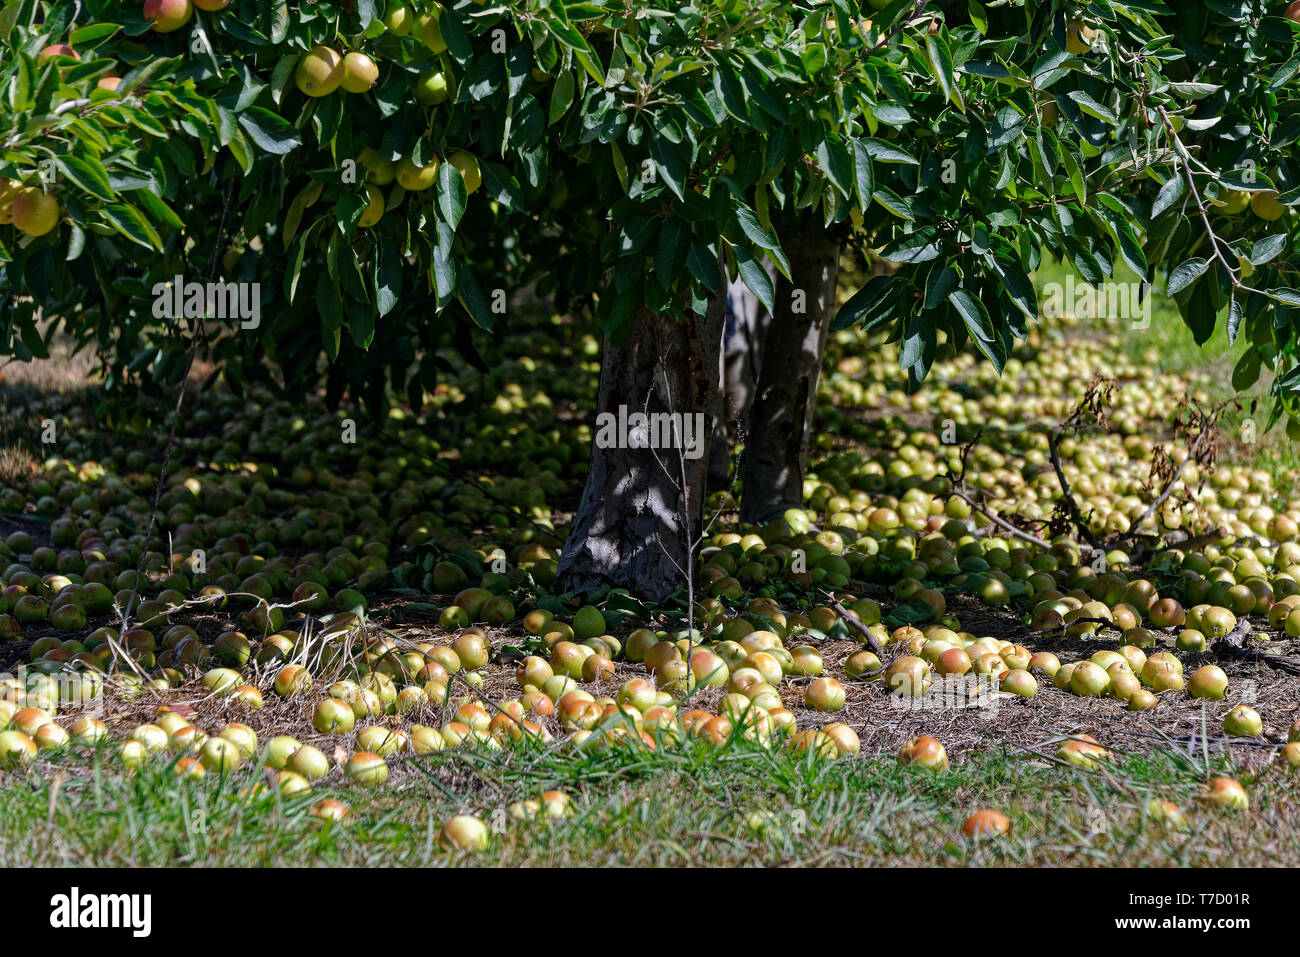 Foto illustrante i rifiuti nei moderni orcharding, mele giacente sul terreno andando marcio Foto Stock